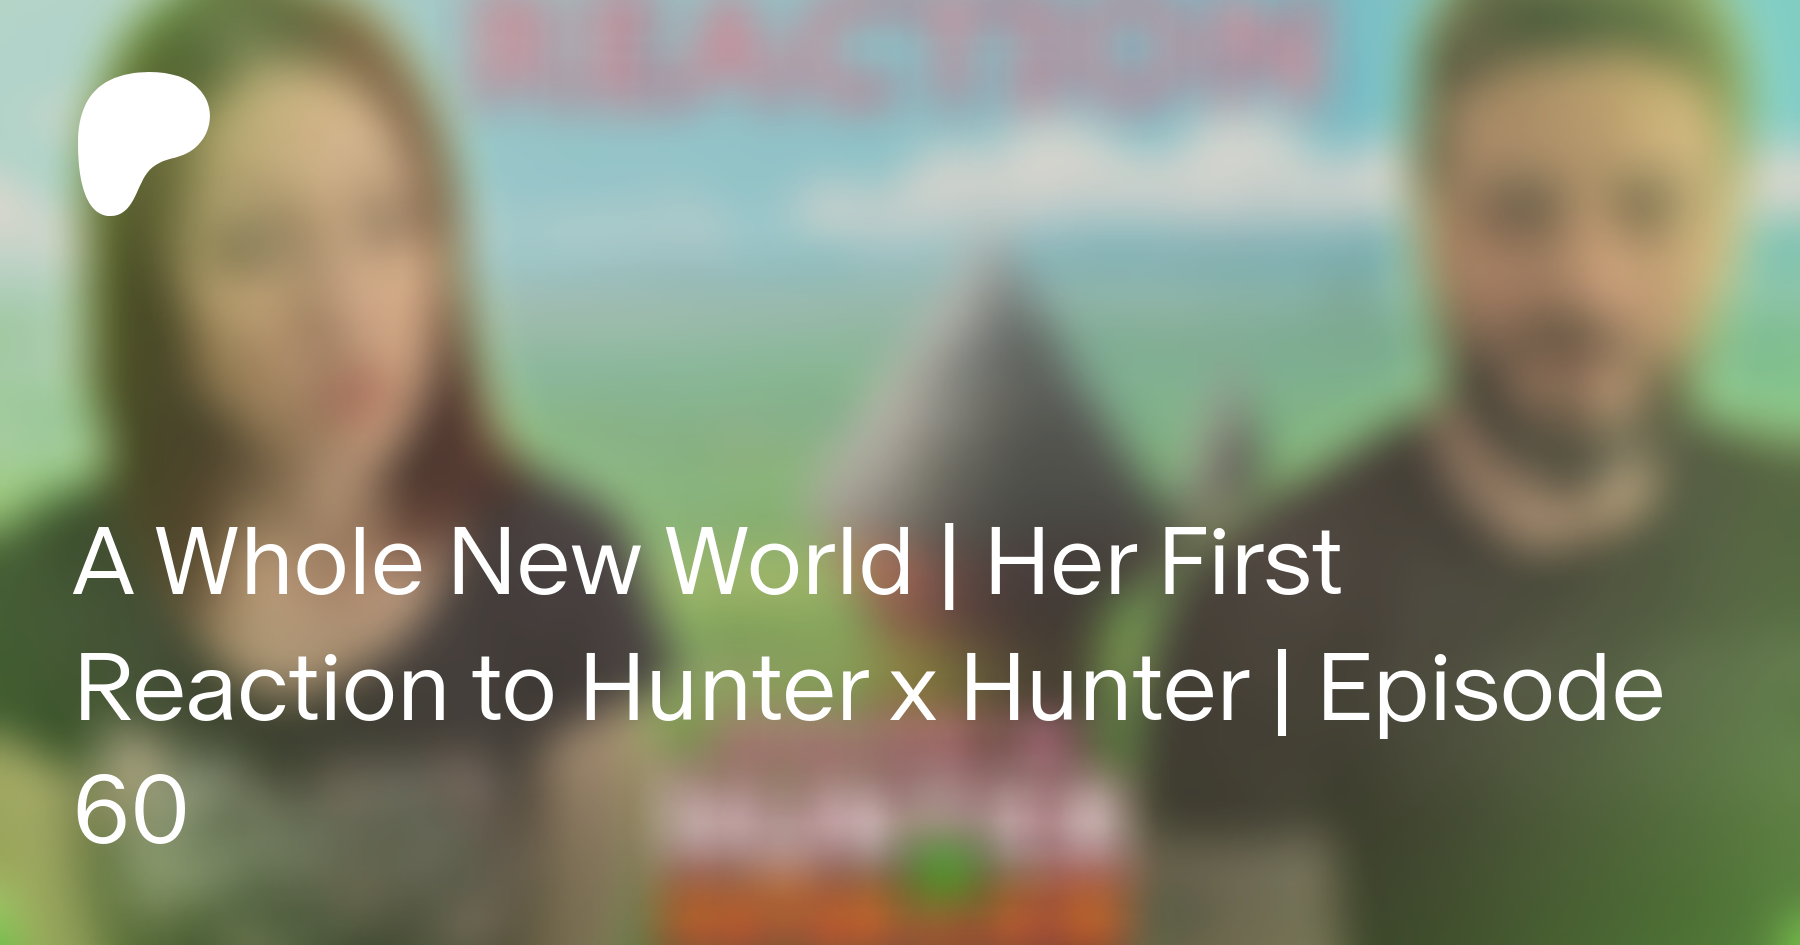 Hunter x Hunter Episode 60